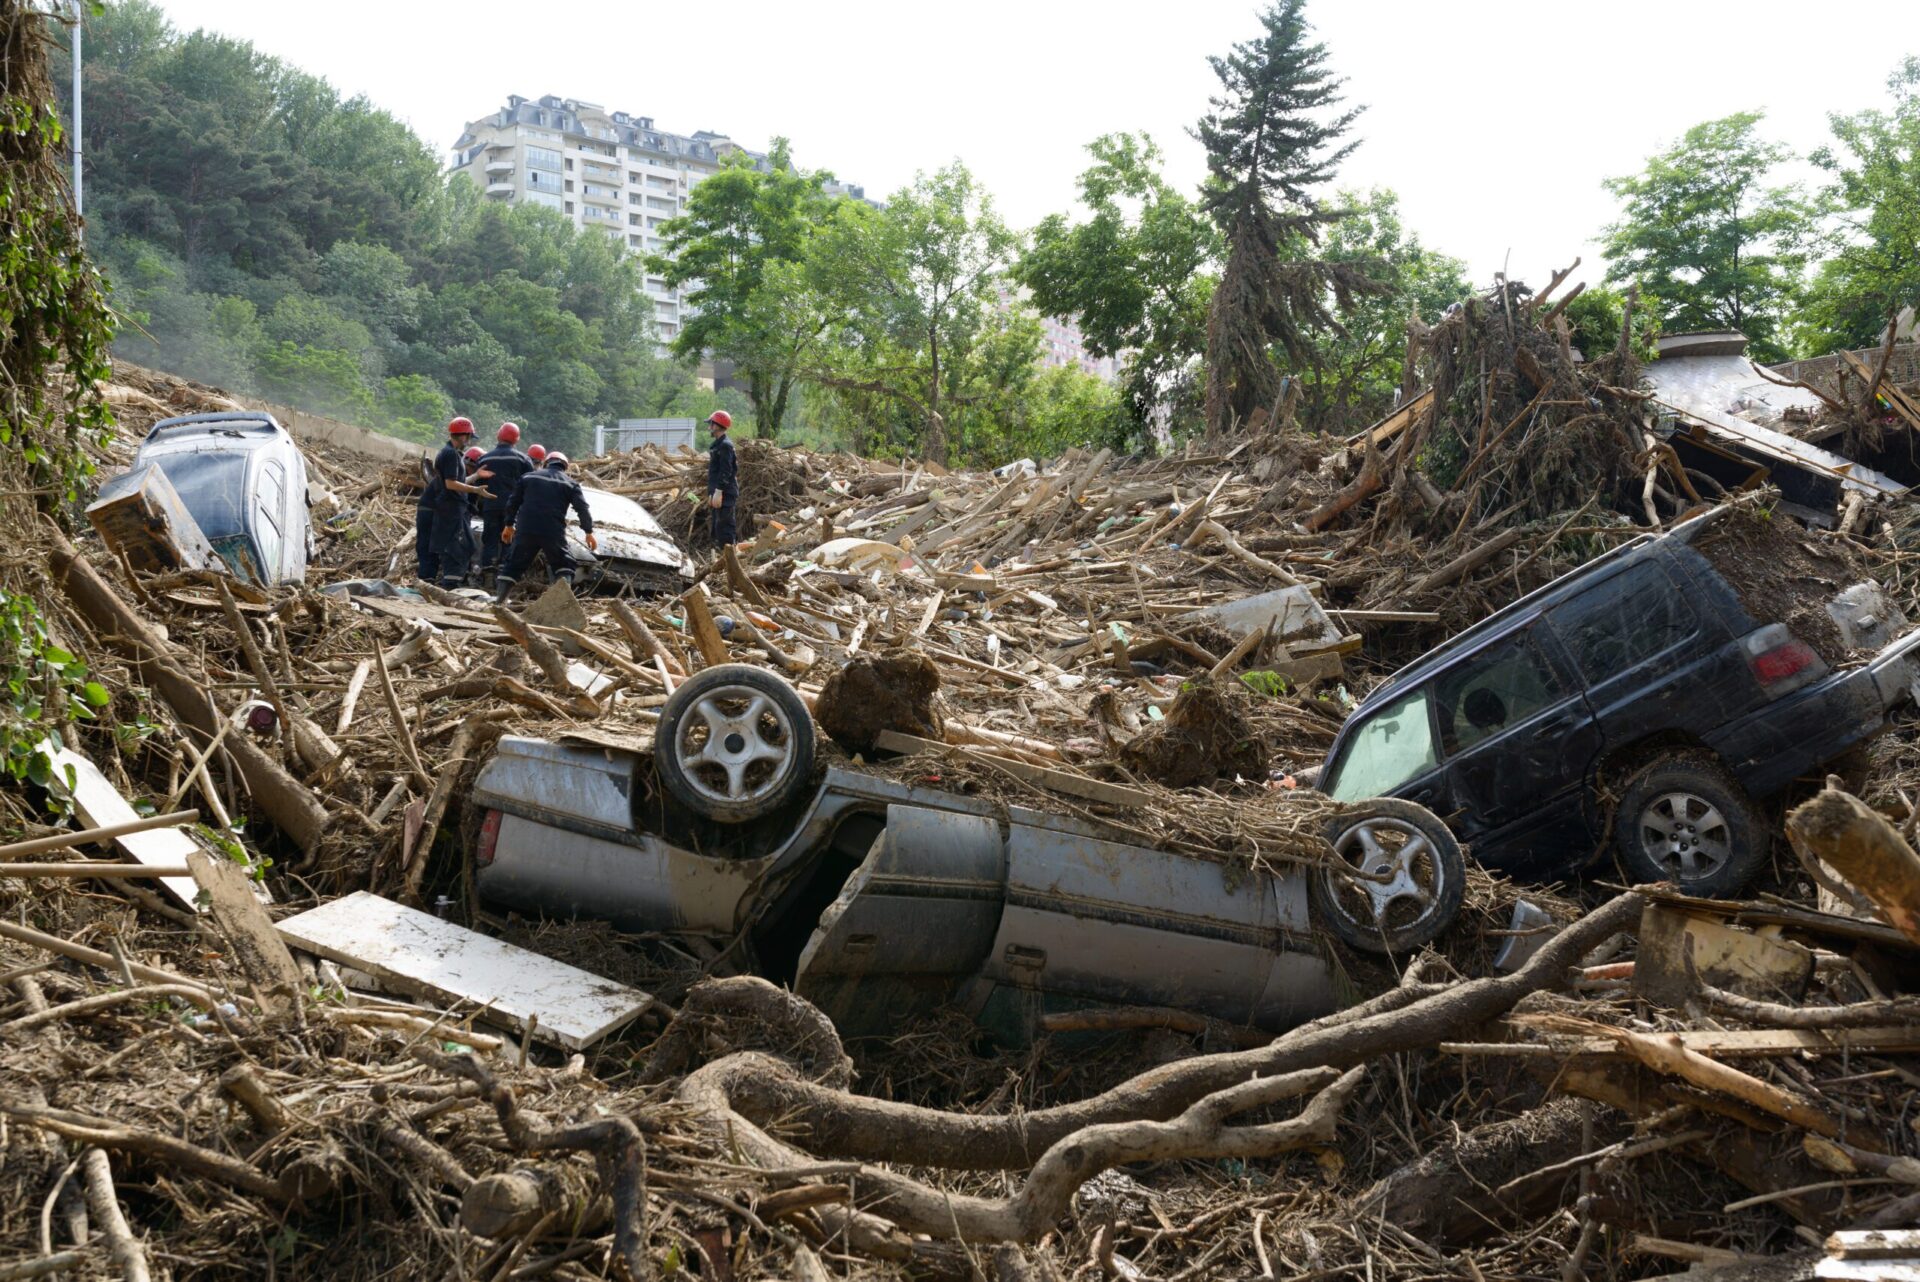 Rescue,Service,Assorted,Debris,After,Floods